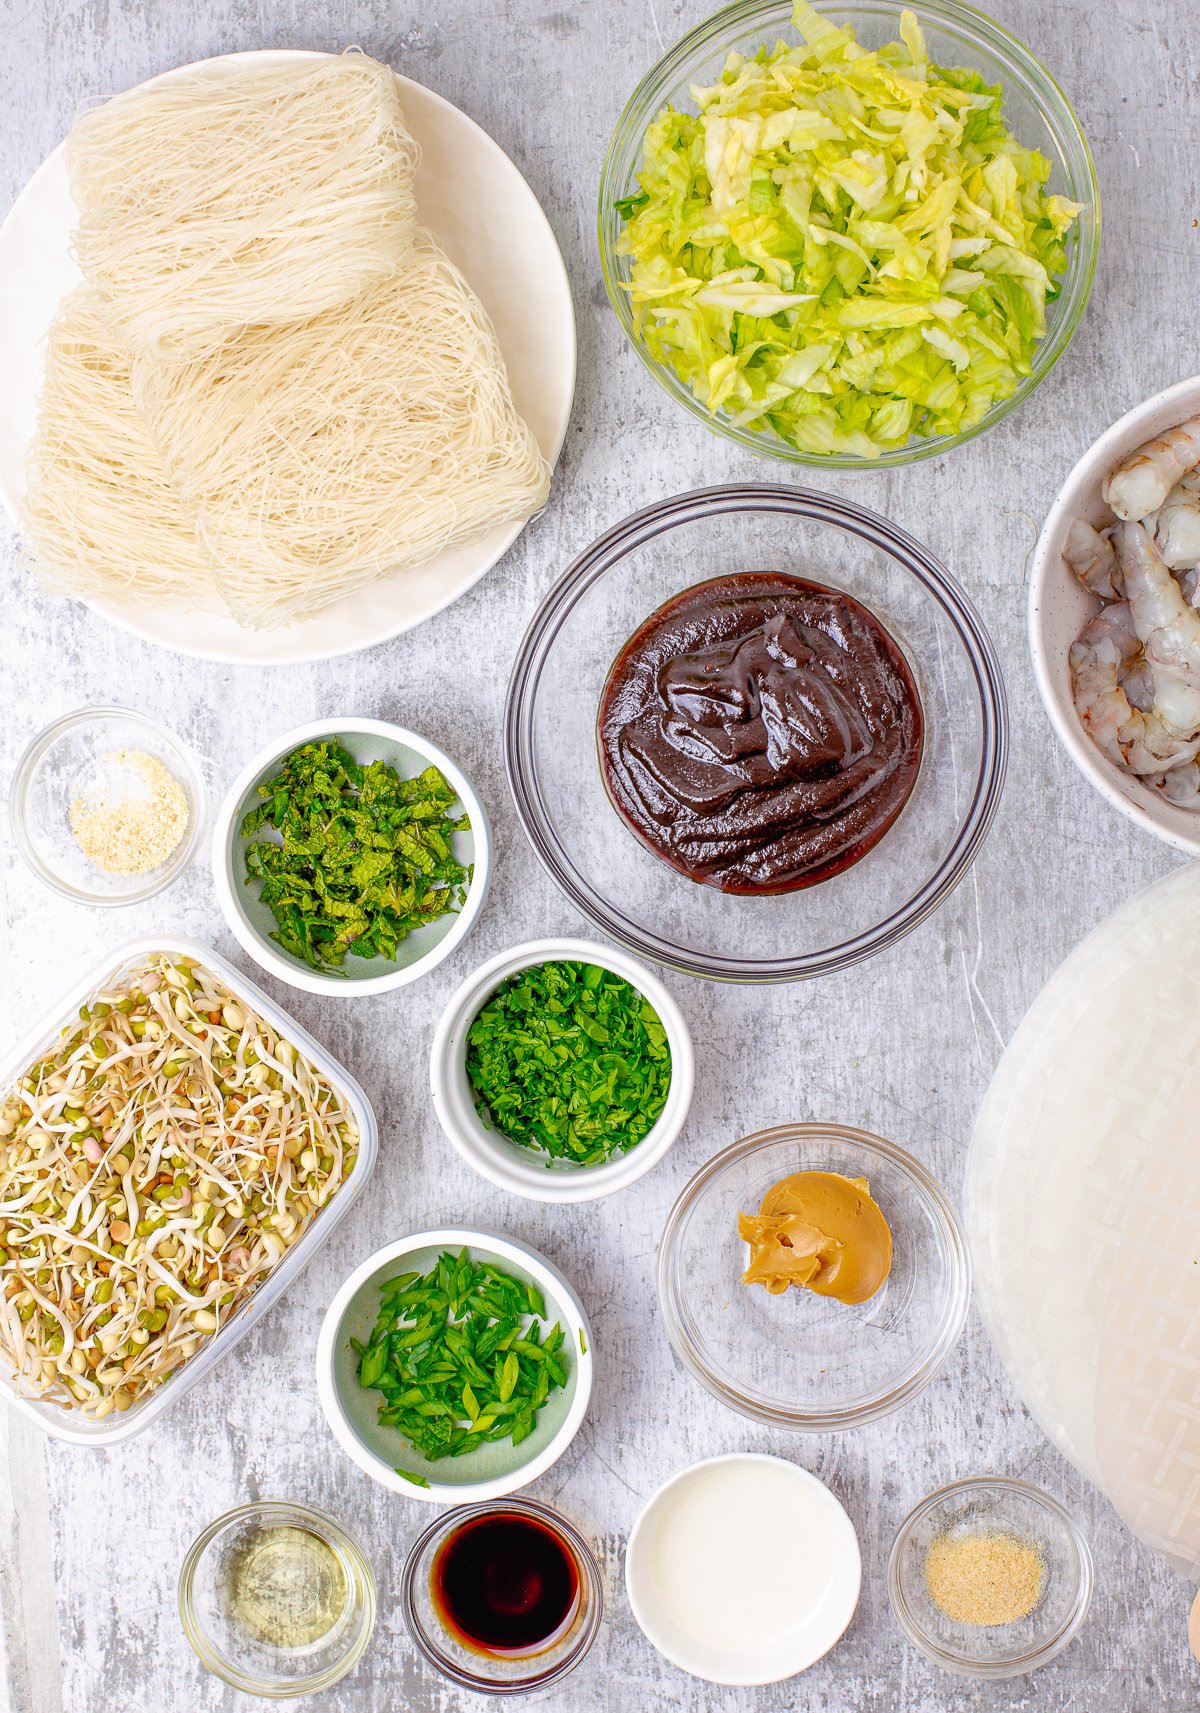 Ingredients needed to make Vietnamese Salad Rolls